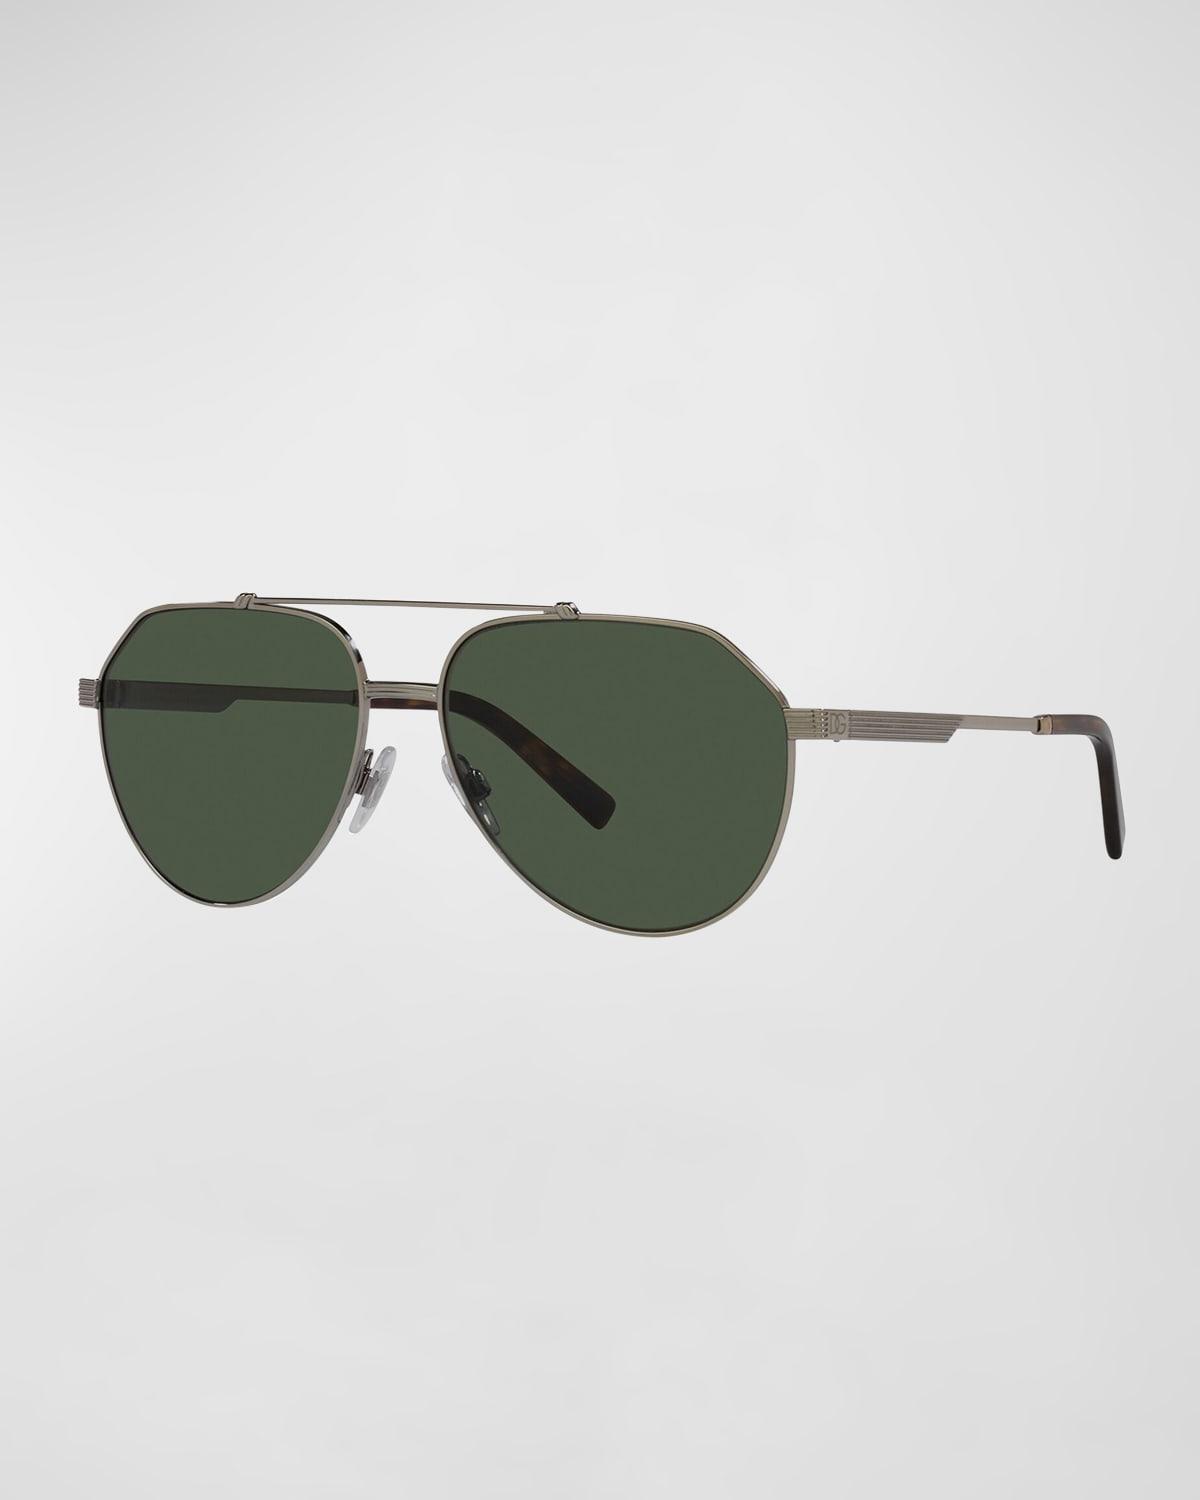 Tory Burch 59mm Pilot Sunglasses Product Image